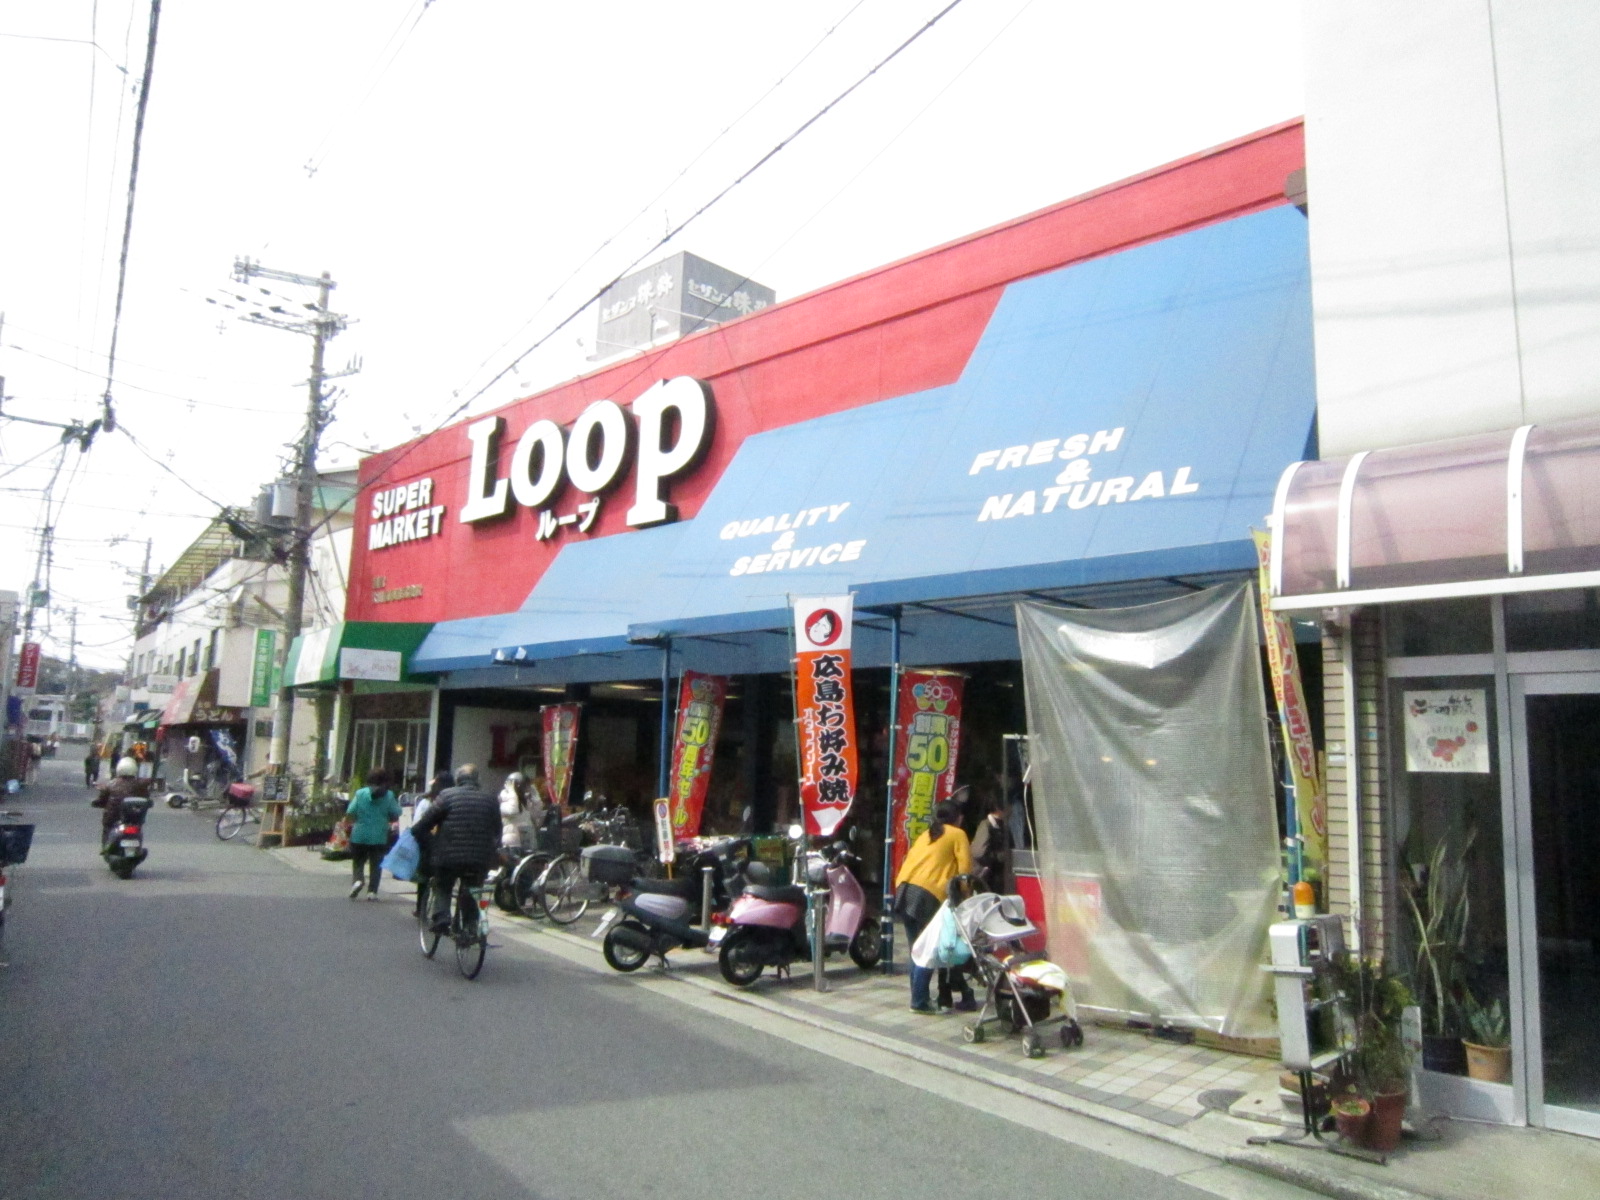 Supermarket. 535m until the loop Hagiharatenjin store (Super)